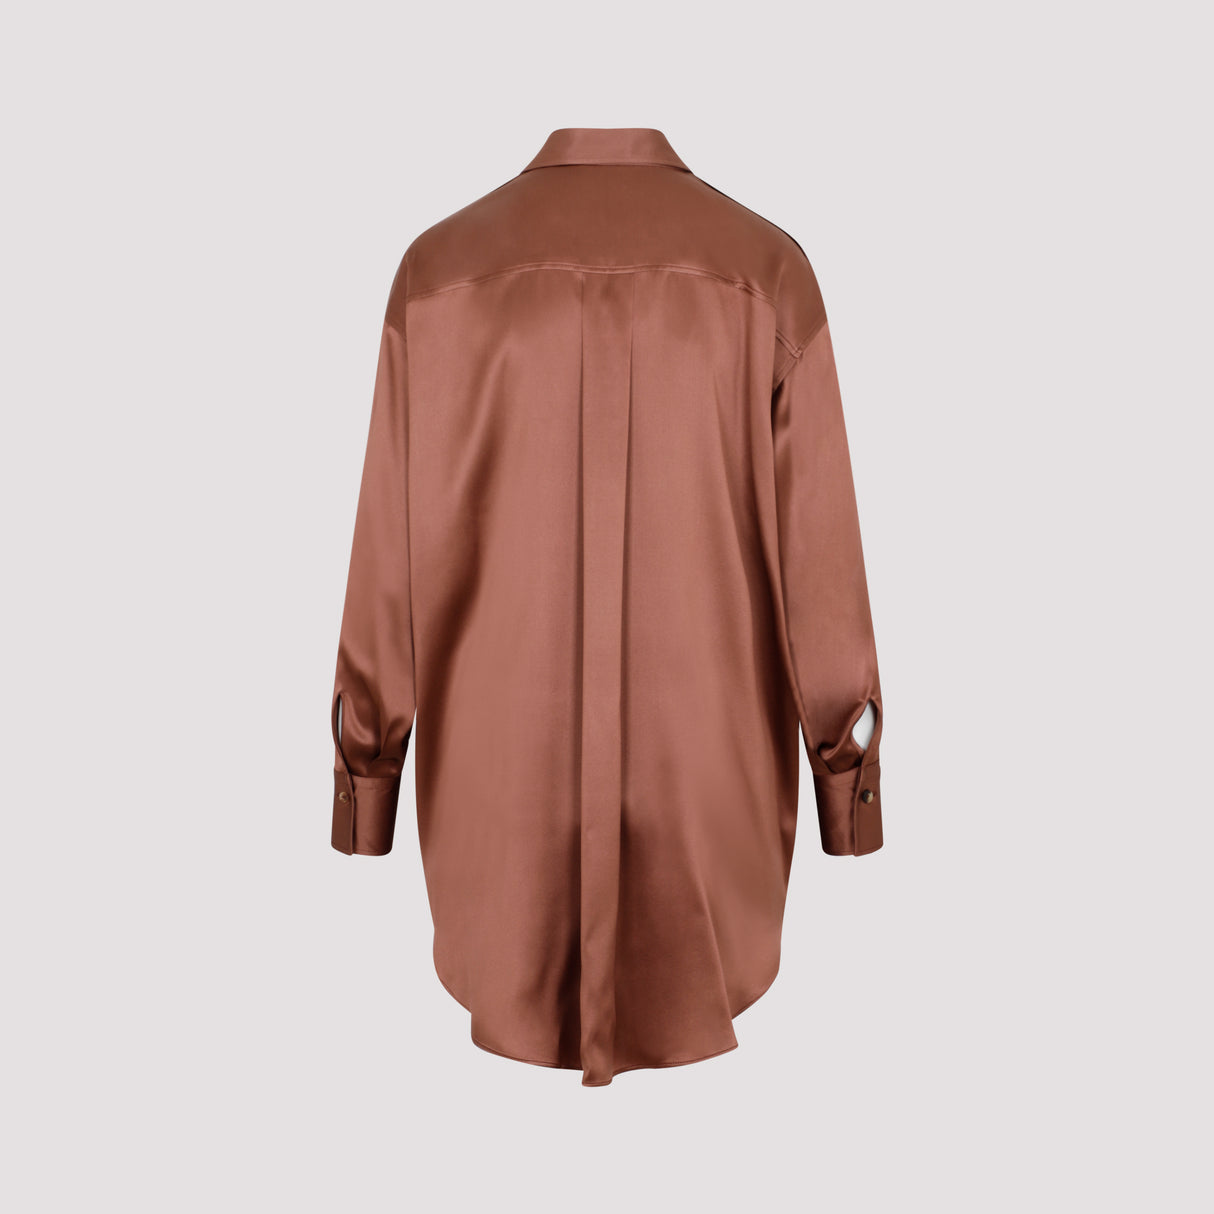 華麗棕色絲綢女士襯衫 | FW22 Collection